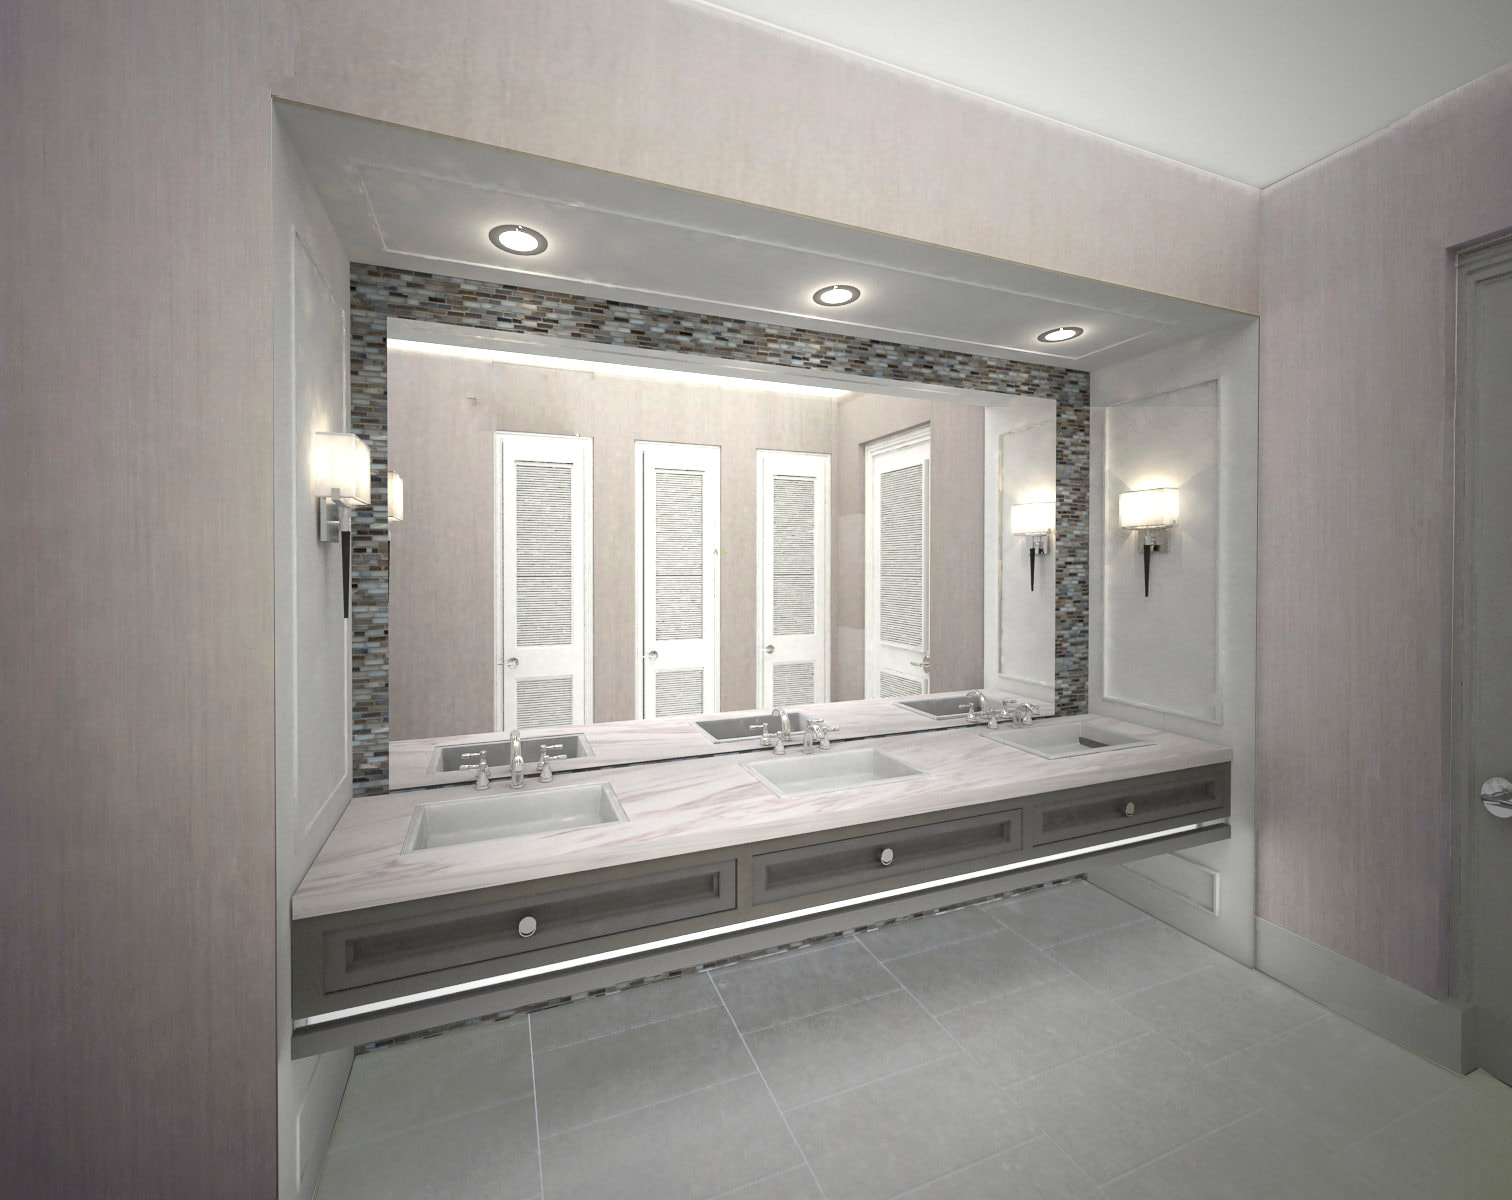 render of bathroom design